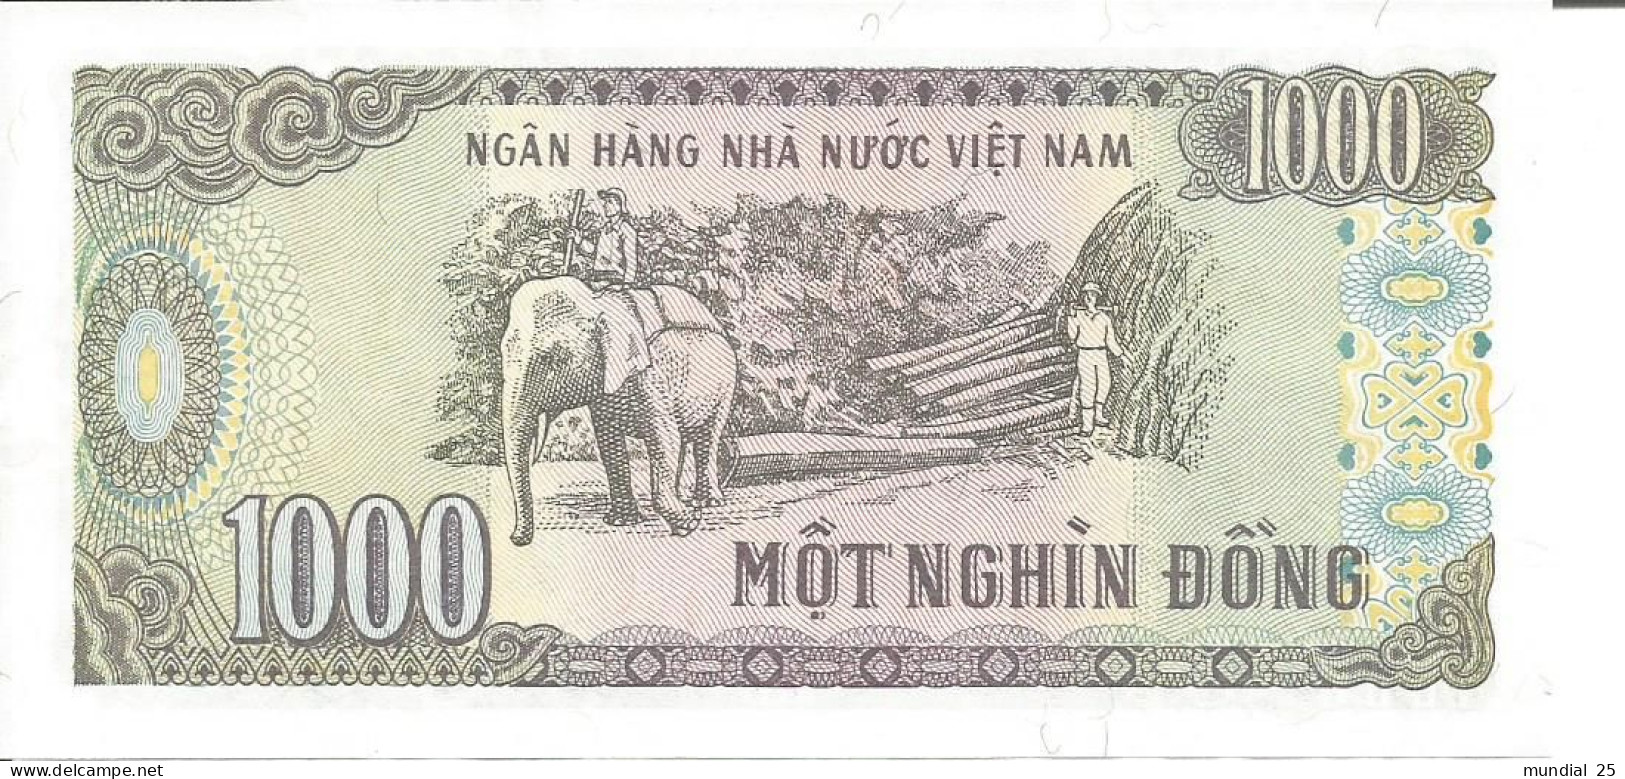 3 VIETNAM NOTES 1.000 DONG 1988 - Viêt-Nam